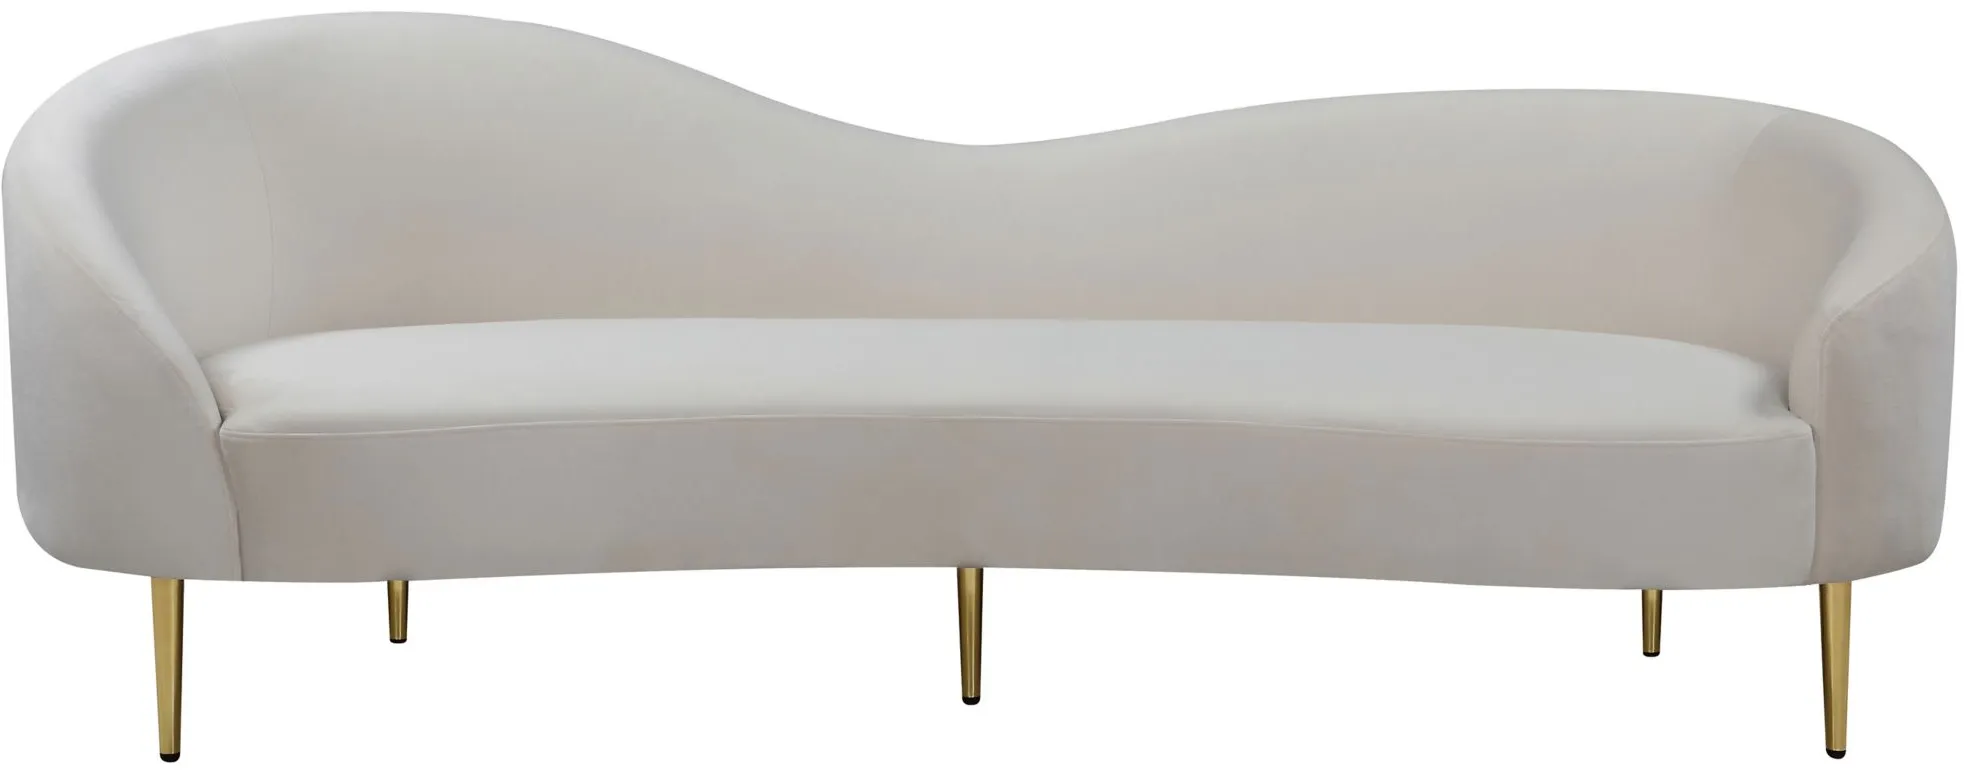 Ritz Velvet Sofa in Cream by Meridian Furniture